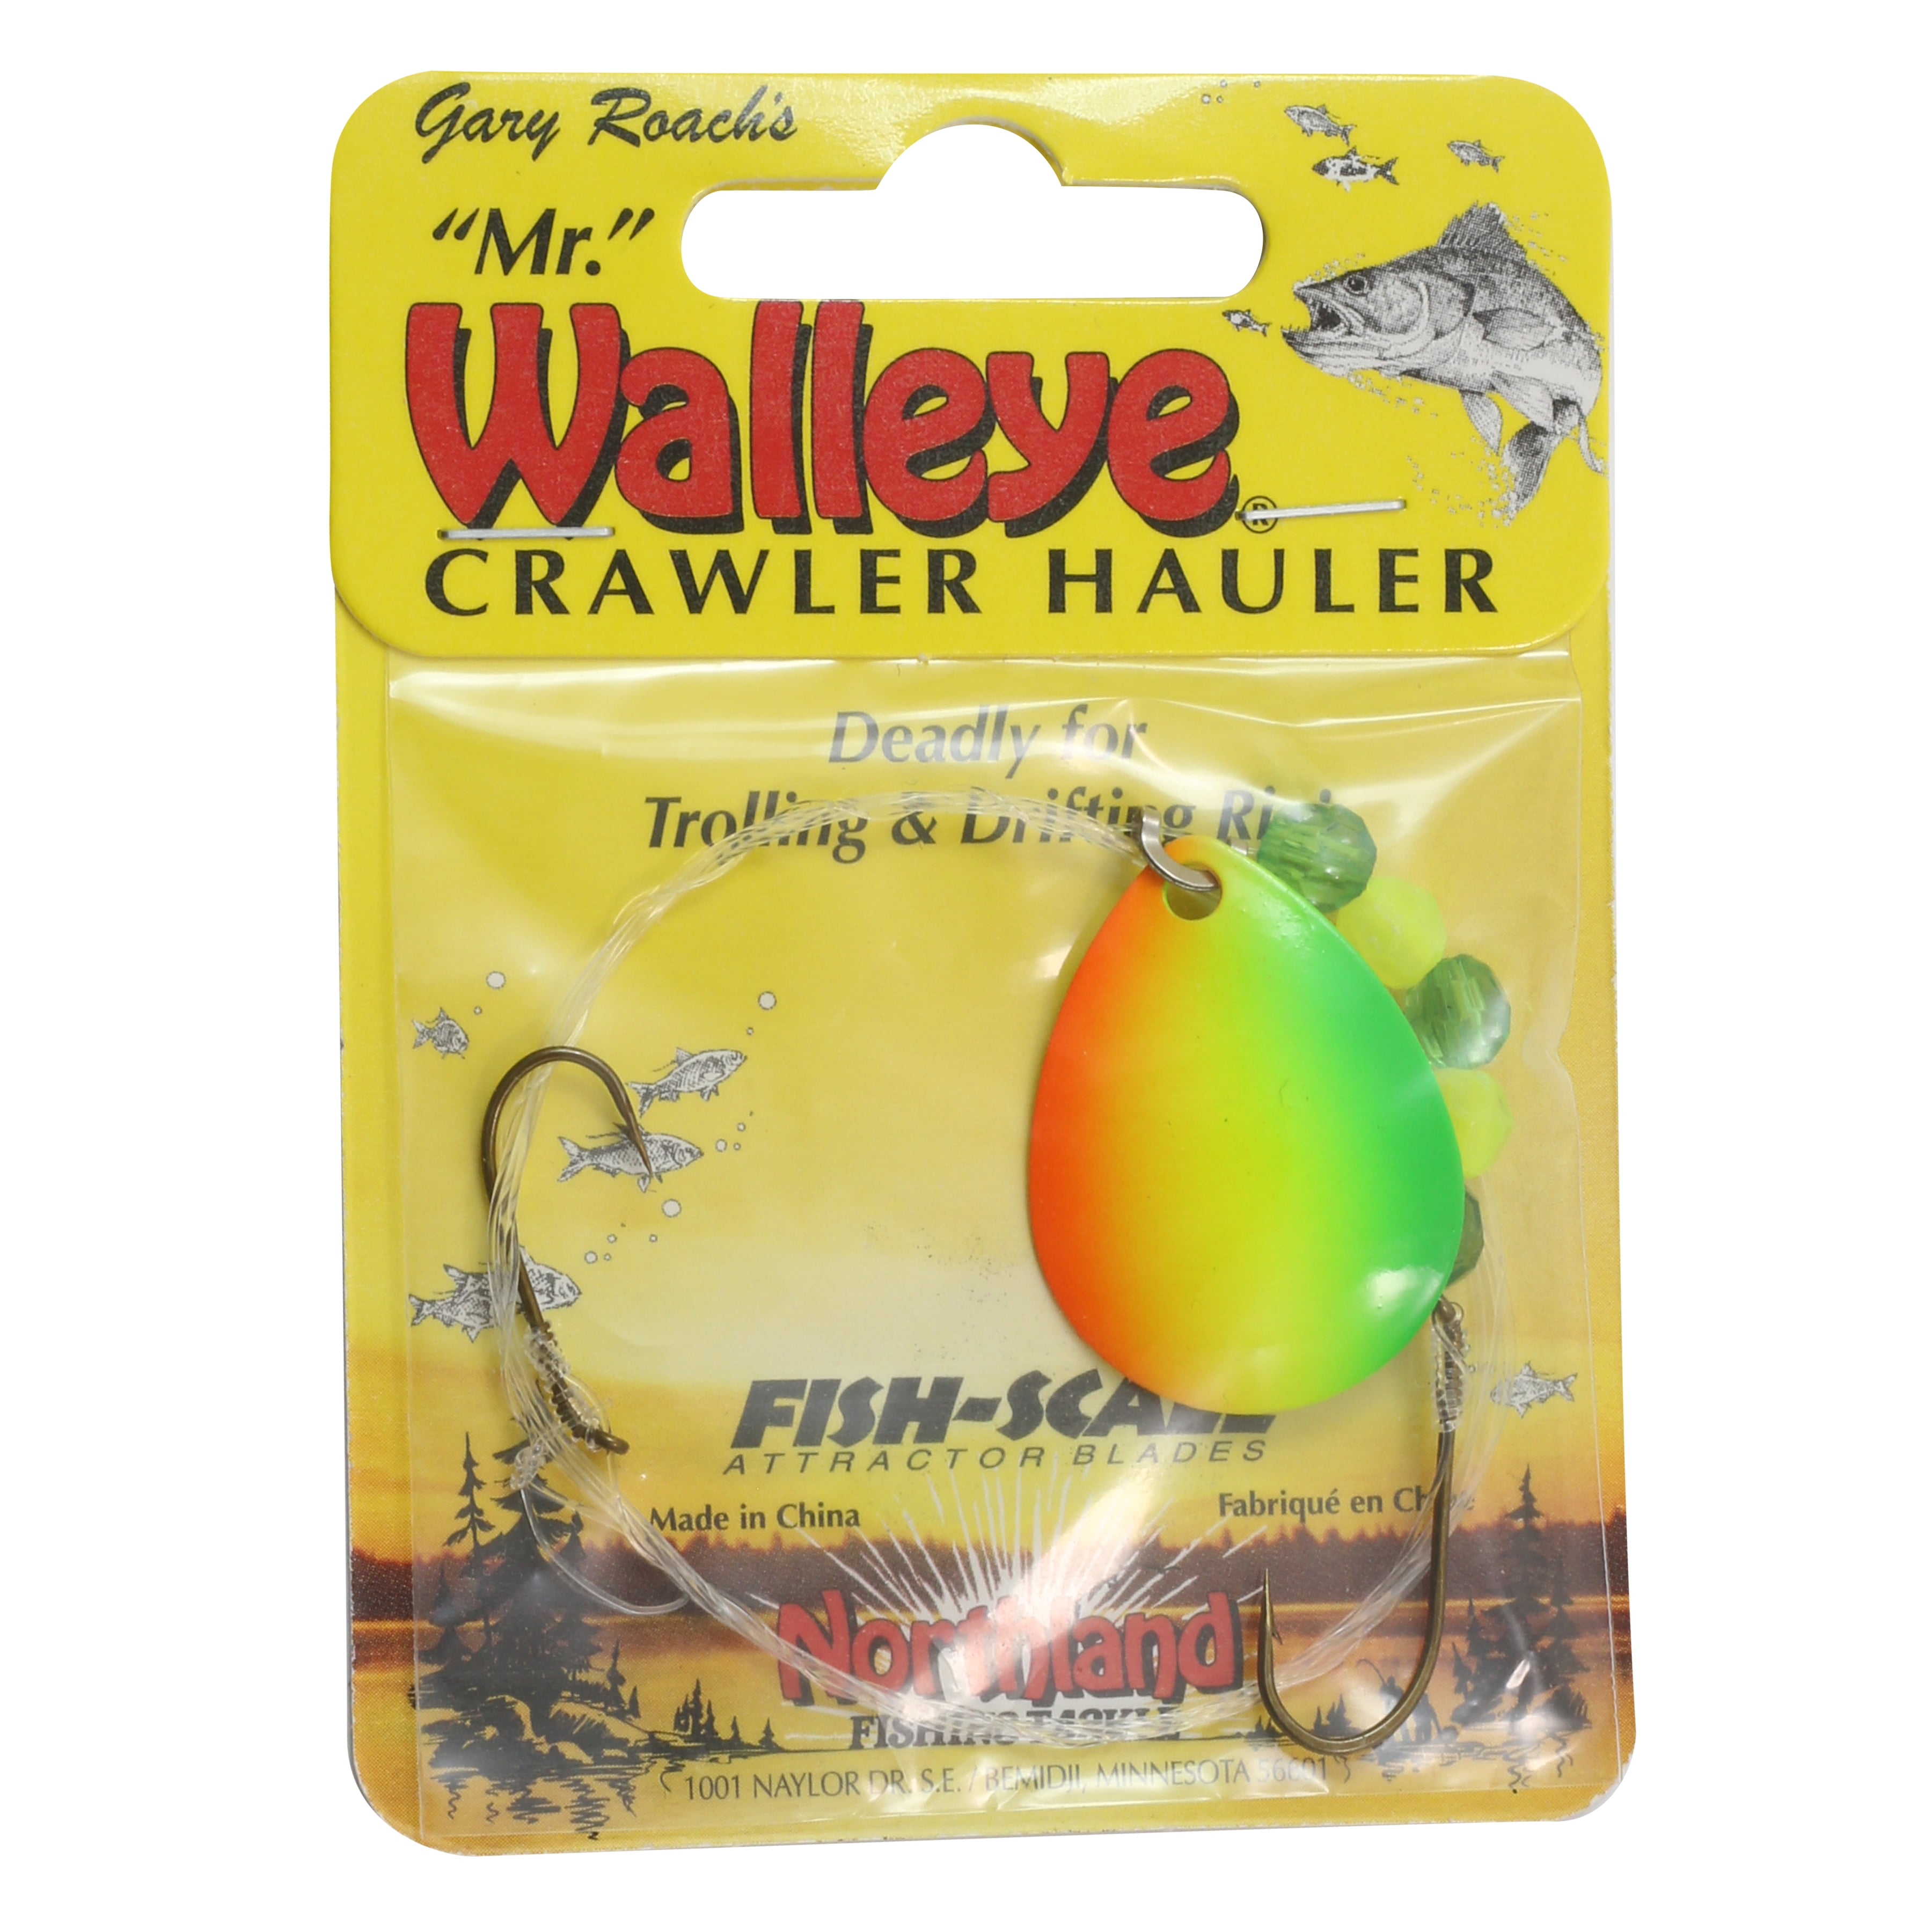 Mr. Walleye Crawler Hauler bright orange and yellow trolling